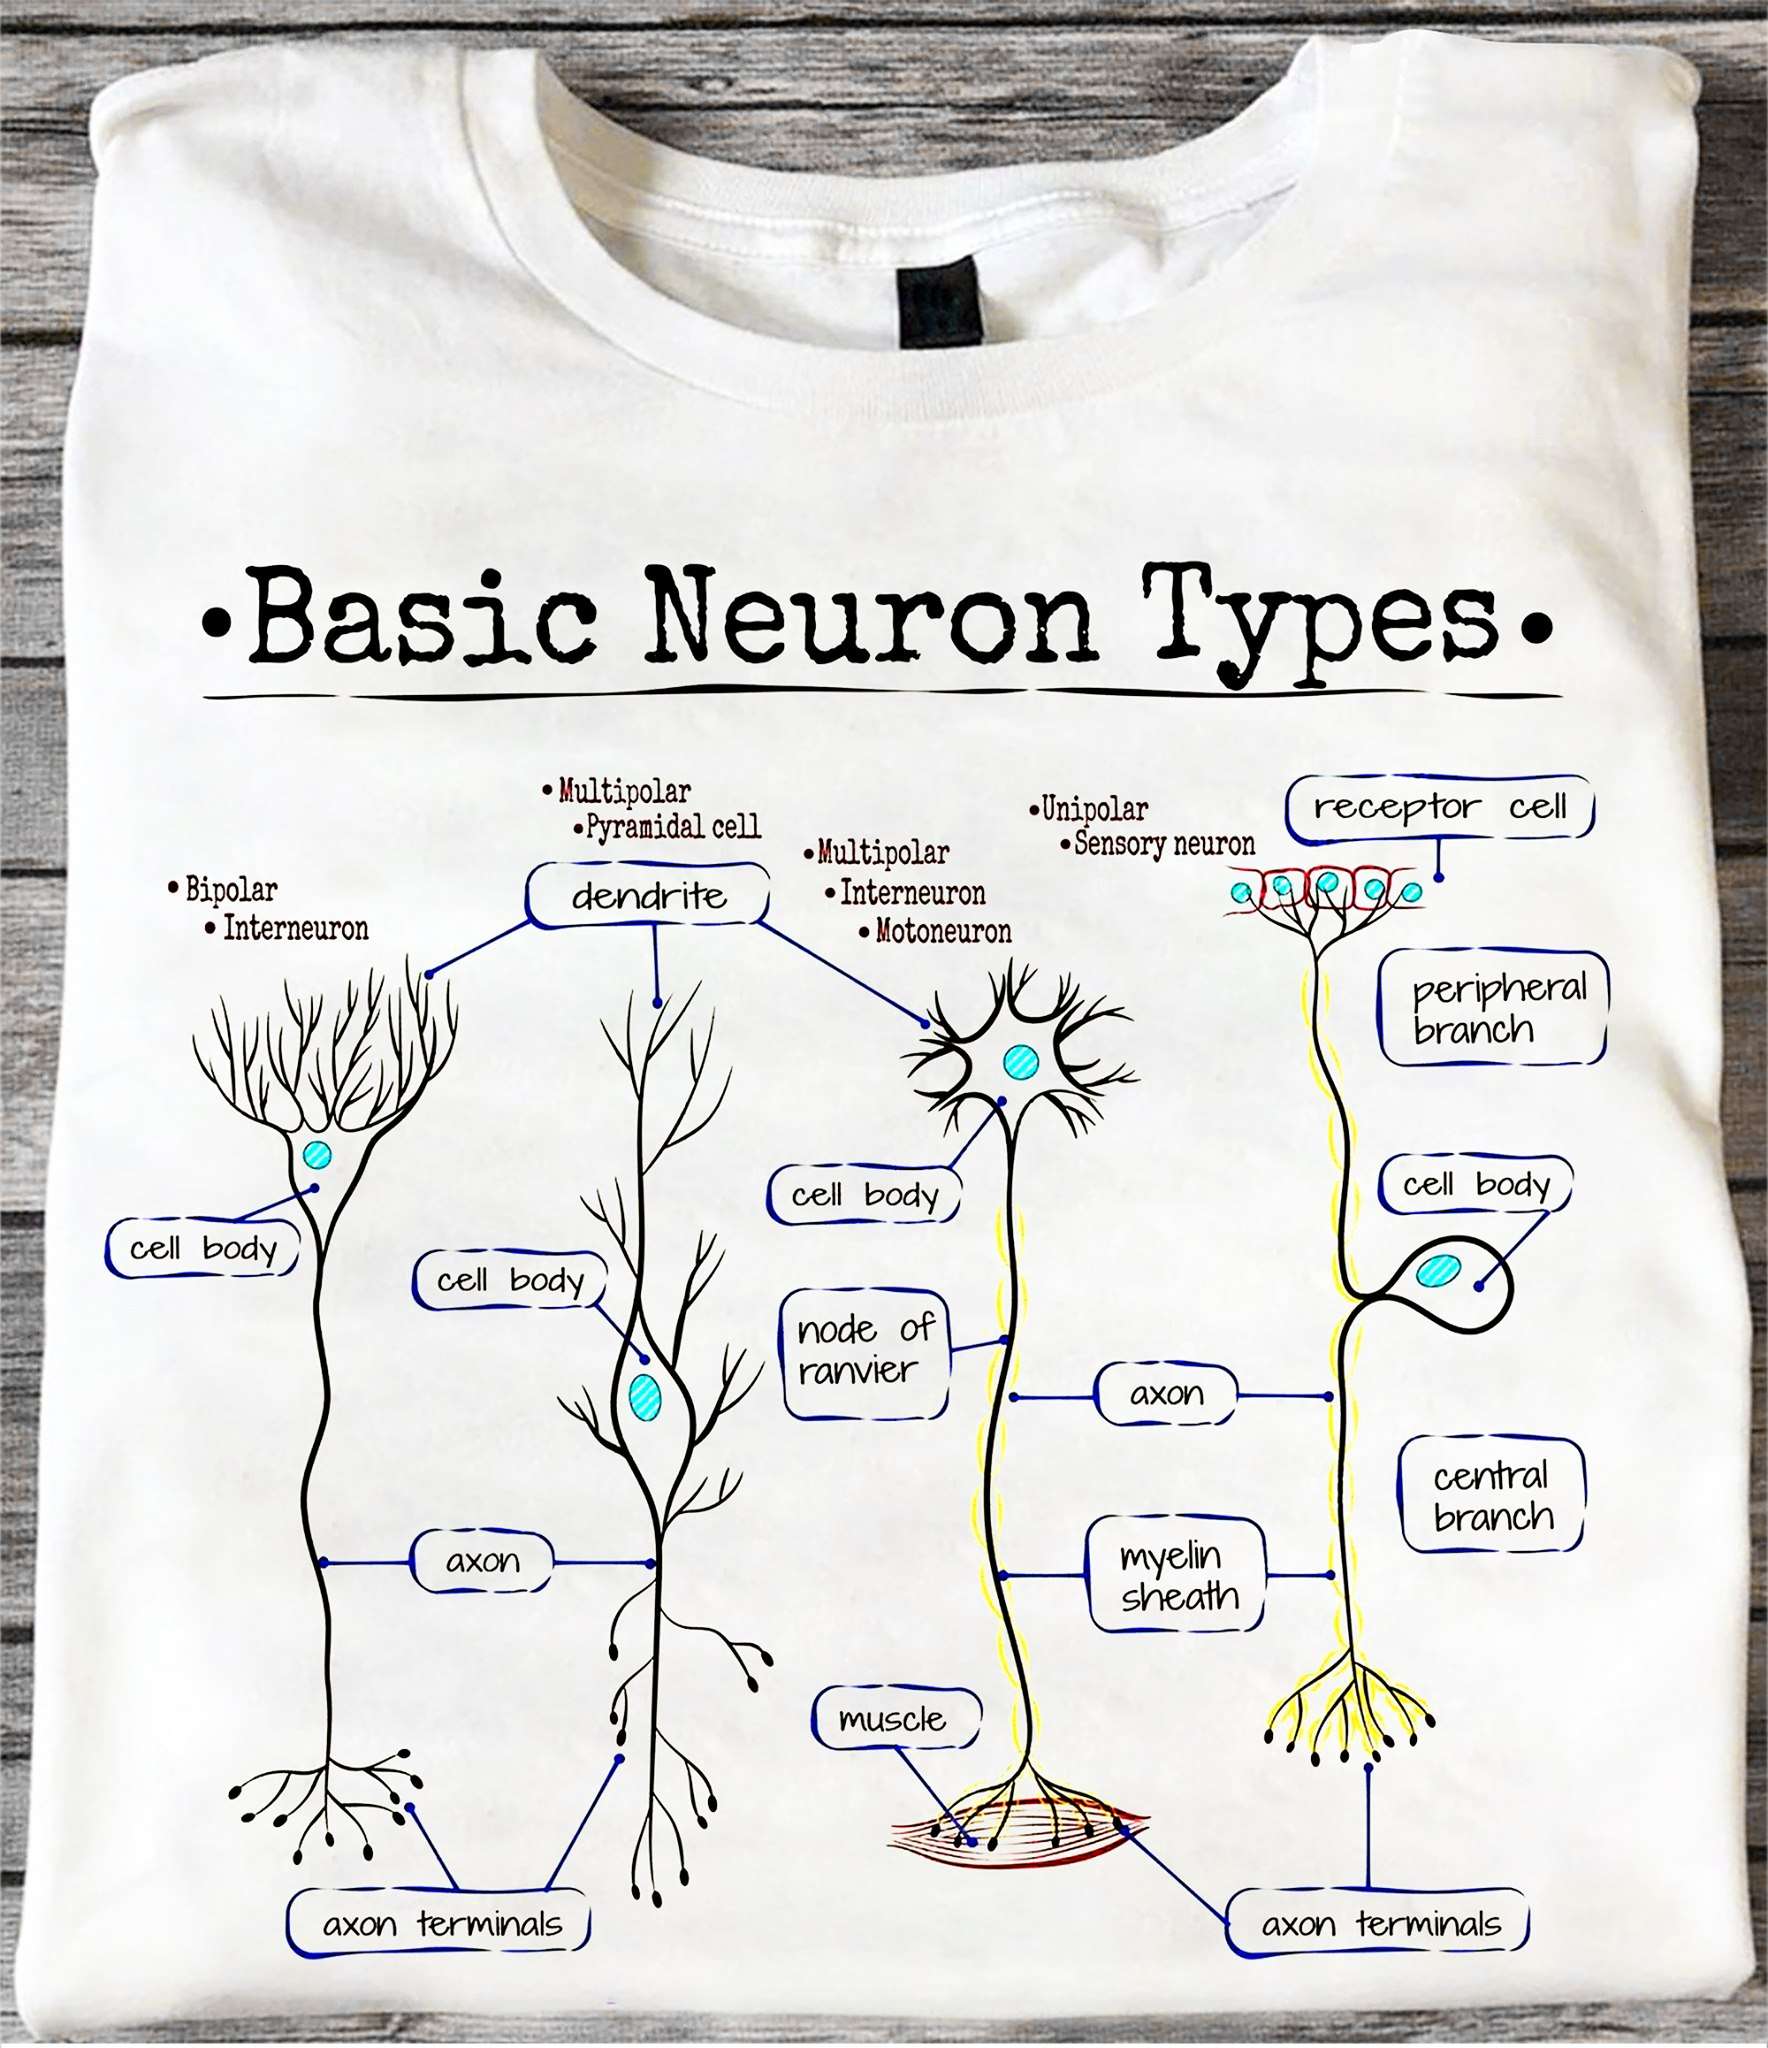 Basic Neuron Types - cell body, axon terminals, node of ranvier, myelin sheath